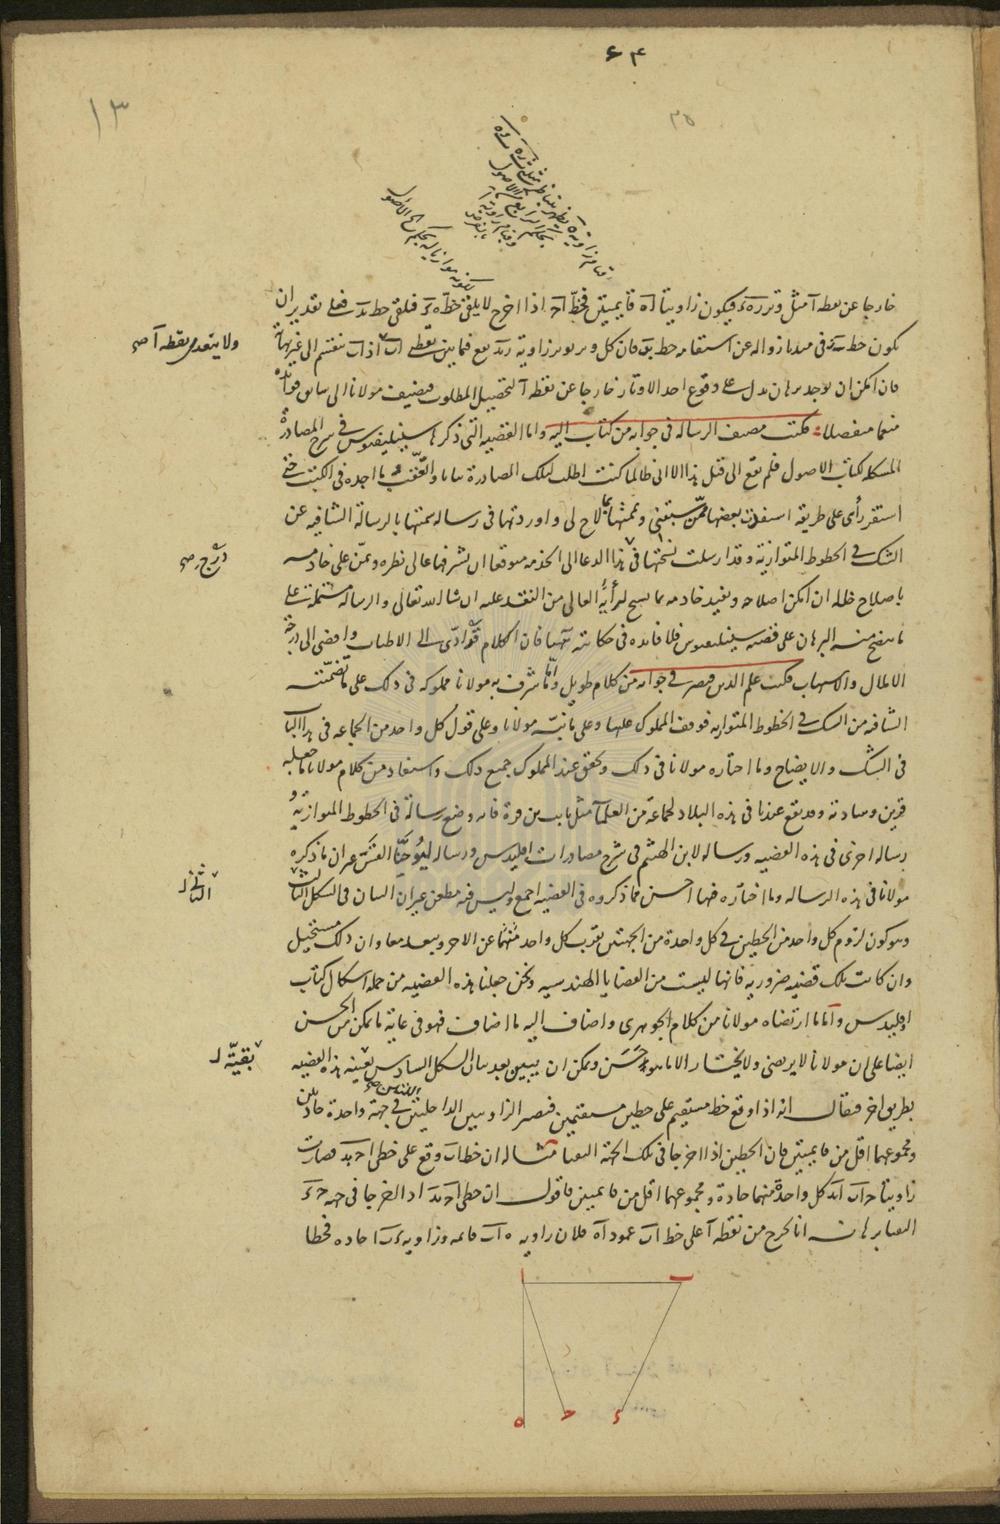 نامه ی علم الدین قیصربن ابی القسم حنفی به خواجه نصیر درباره شرح سنیلیقیوس